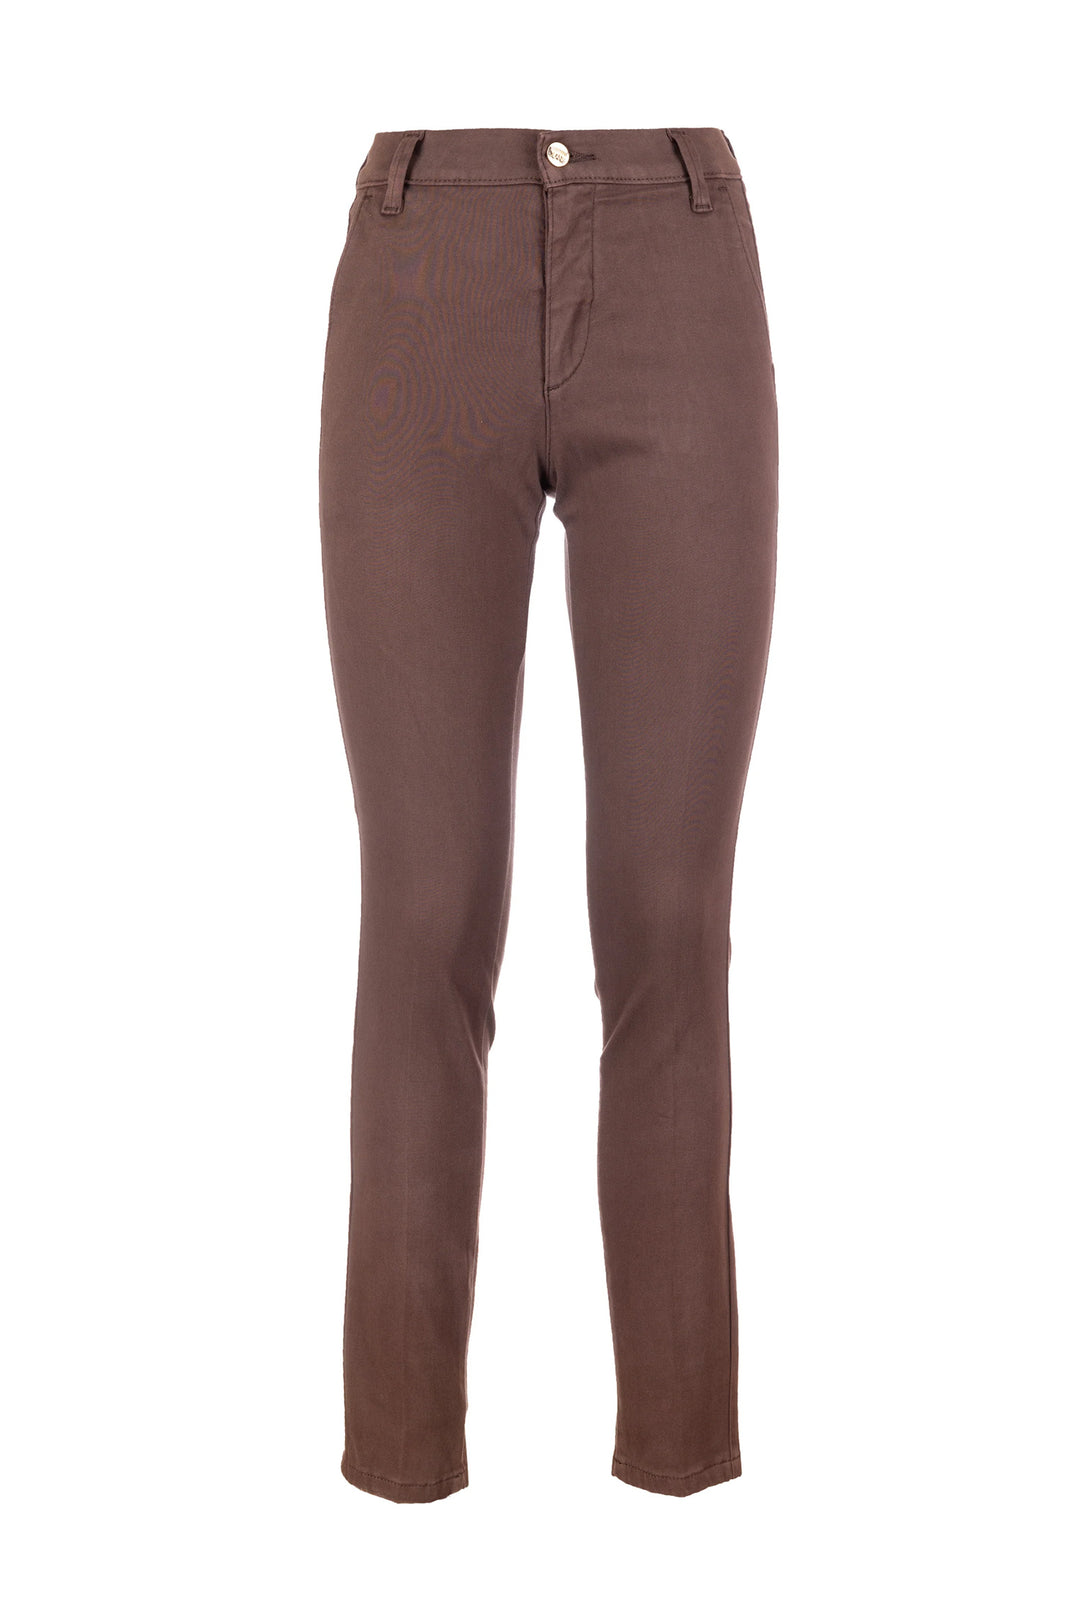 FRACOMINA Pantaloni slim chino marroni in gabardina di cotone stretch - Mancinelli 1954